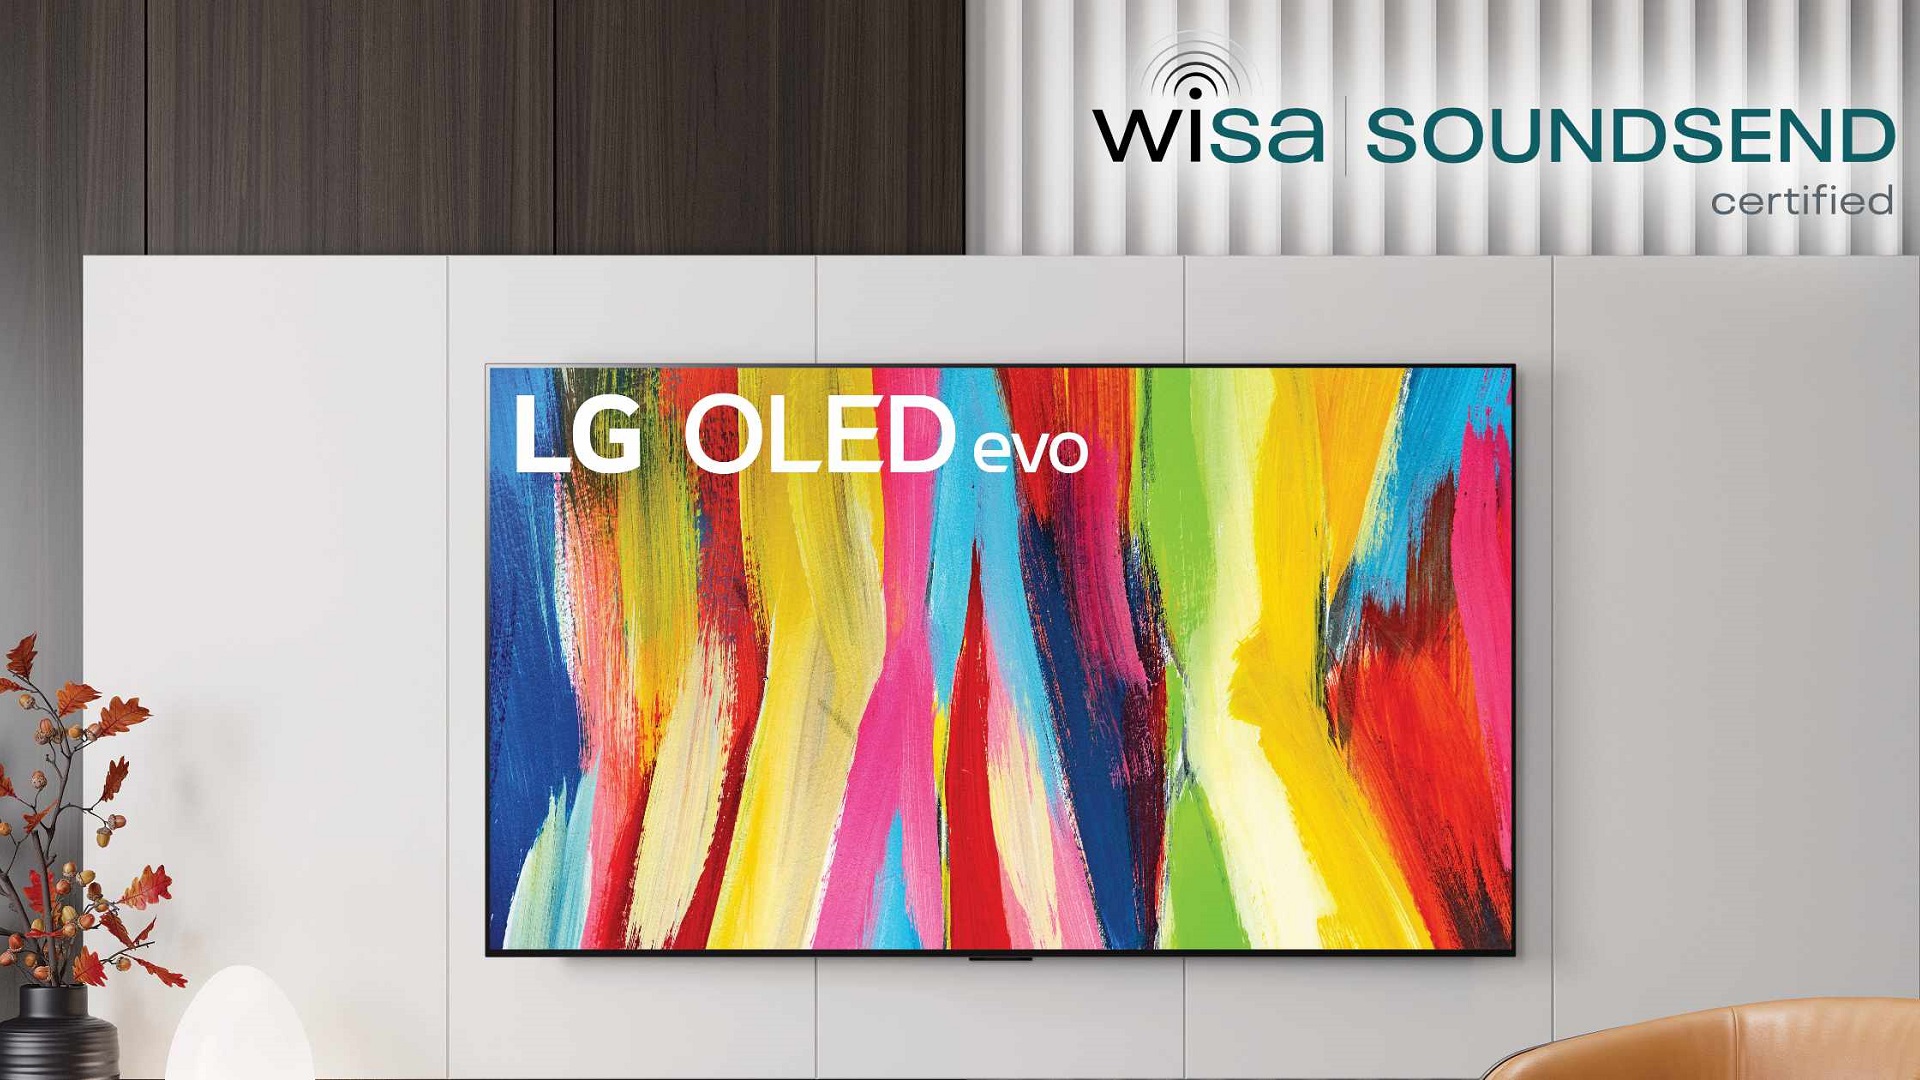 WiSA SoundSend LG-TV